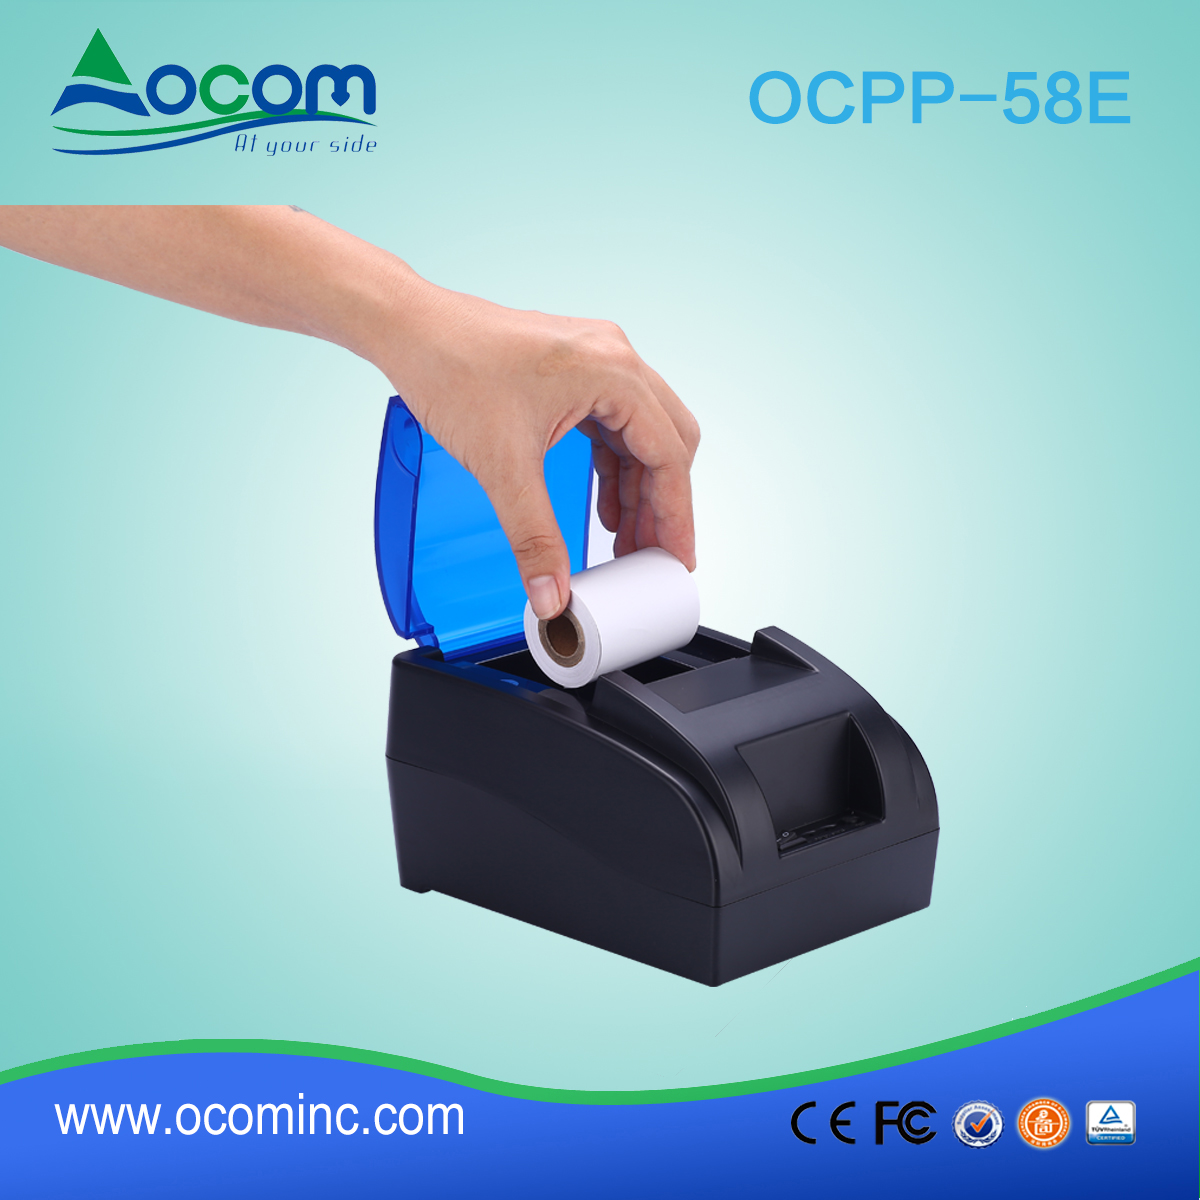 OCPP -58E дешевый 2-дюймовый принтер для печати штрих-кодов android bluetooth термопринтер